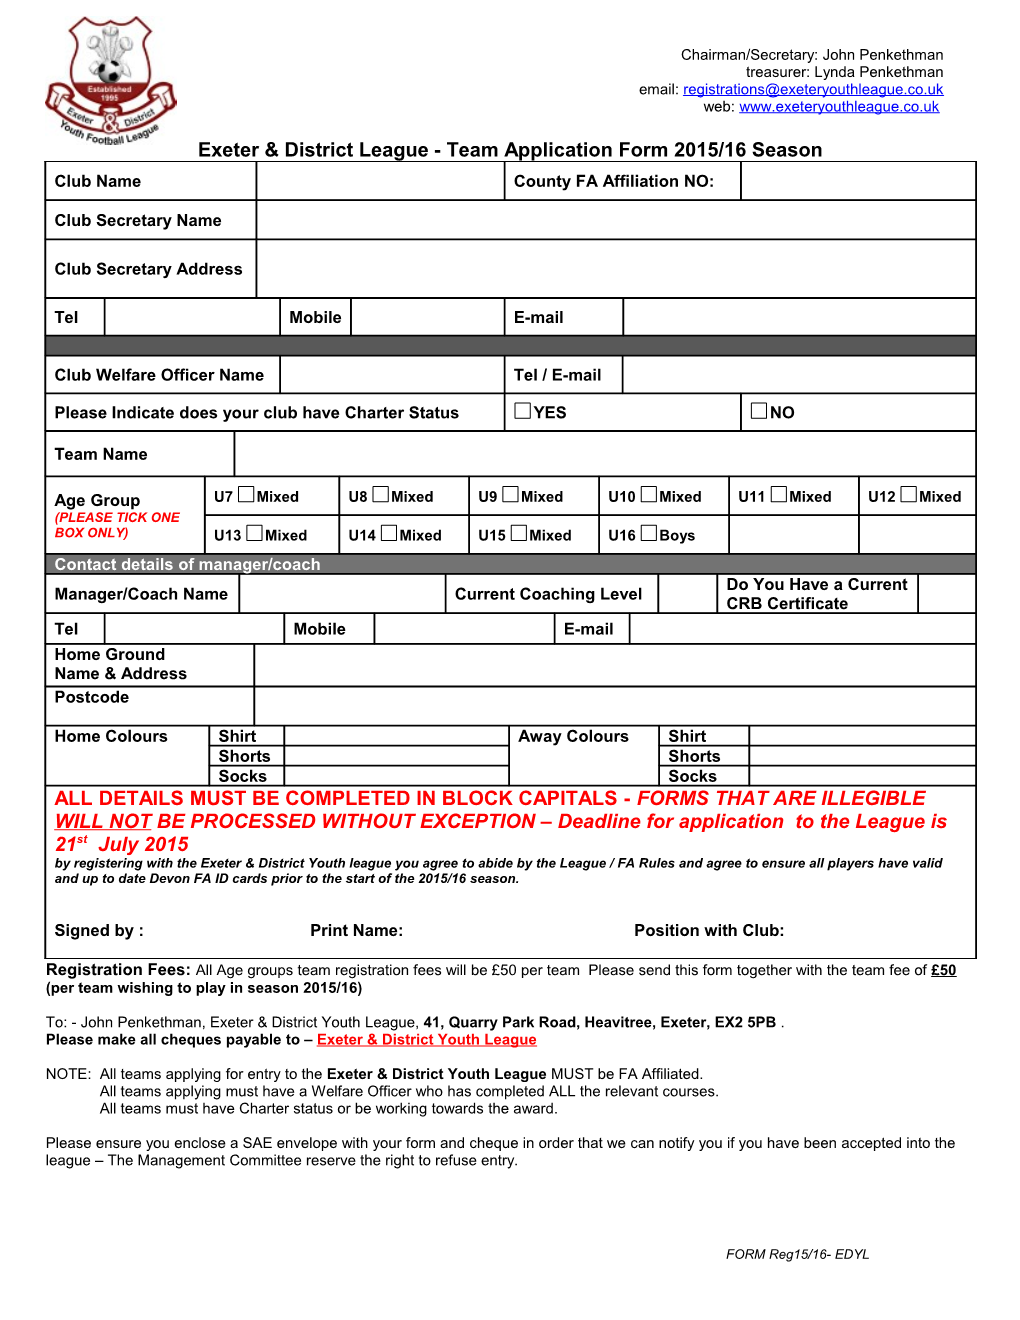 Exeter & District League - Team Application Form 2015/16 Season